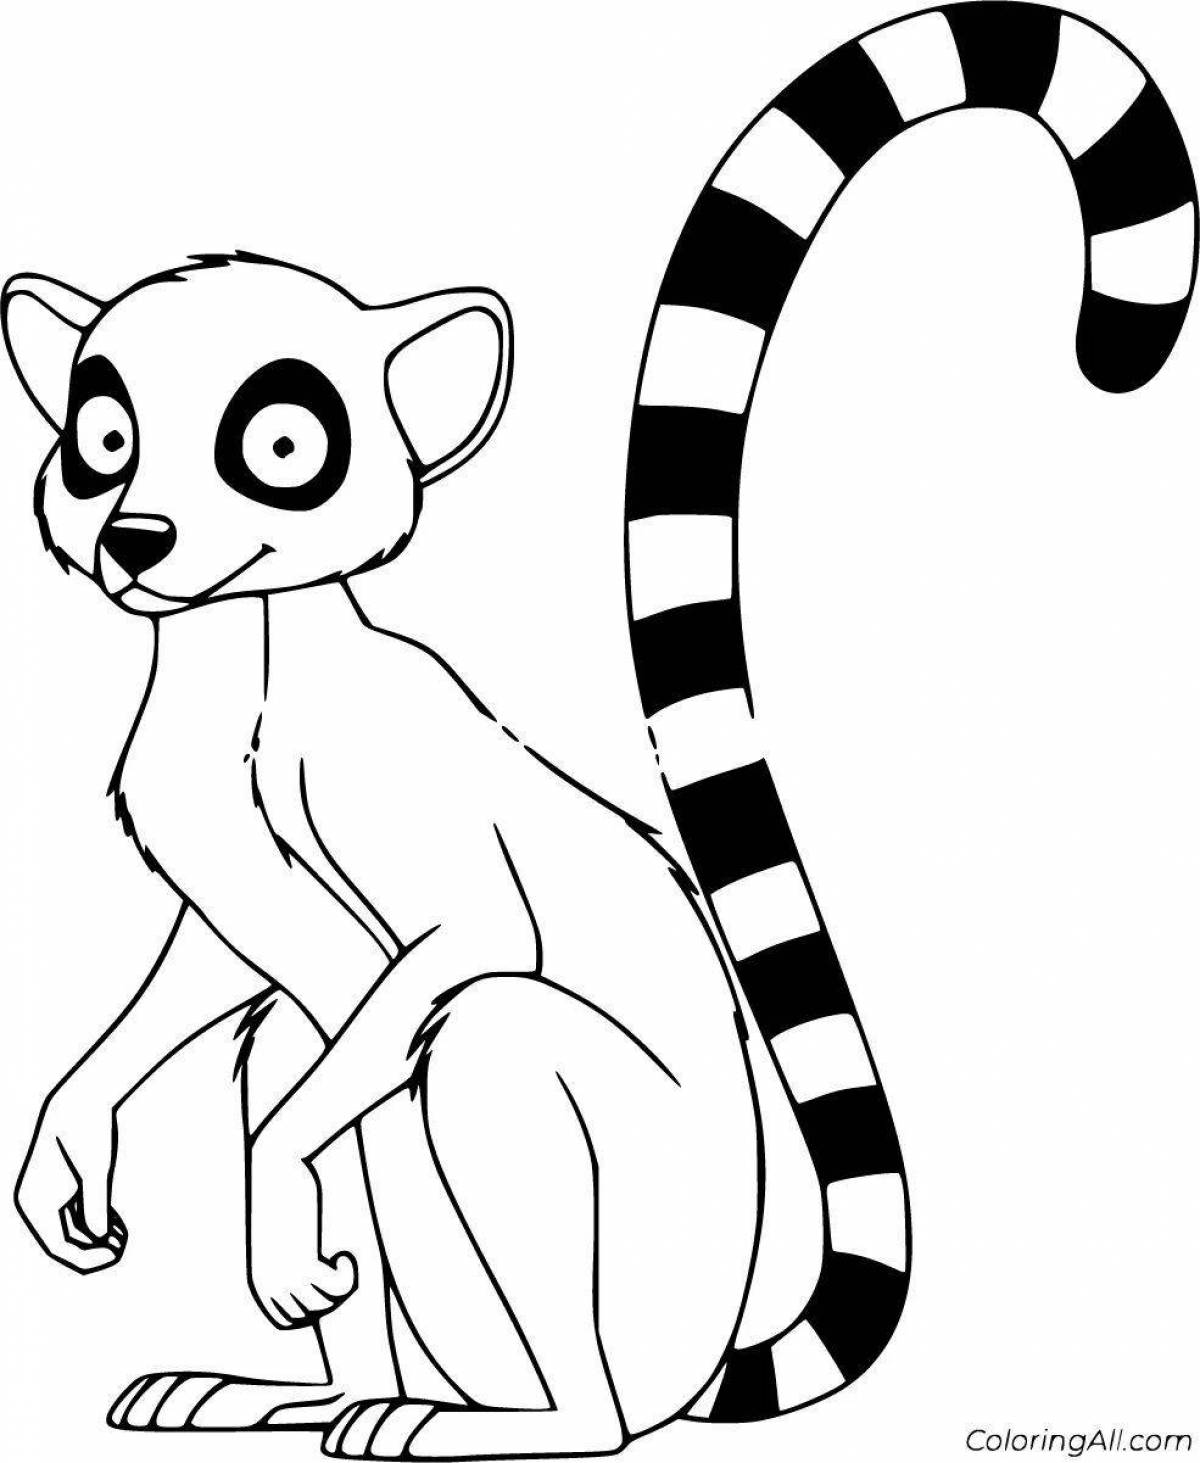 Coloring playful lemur